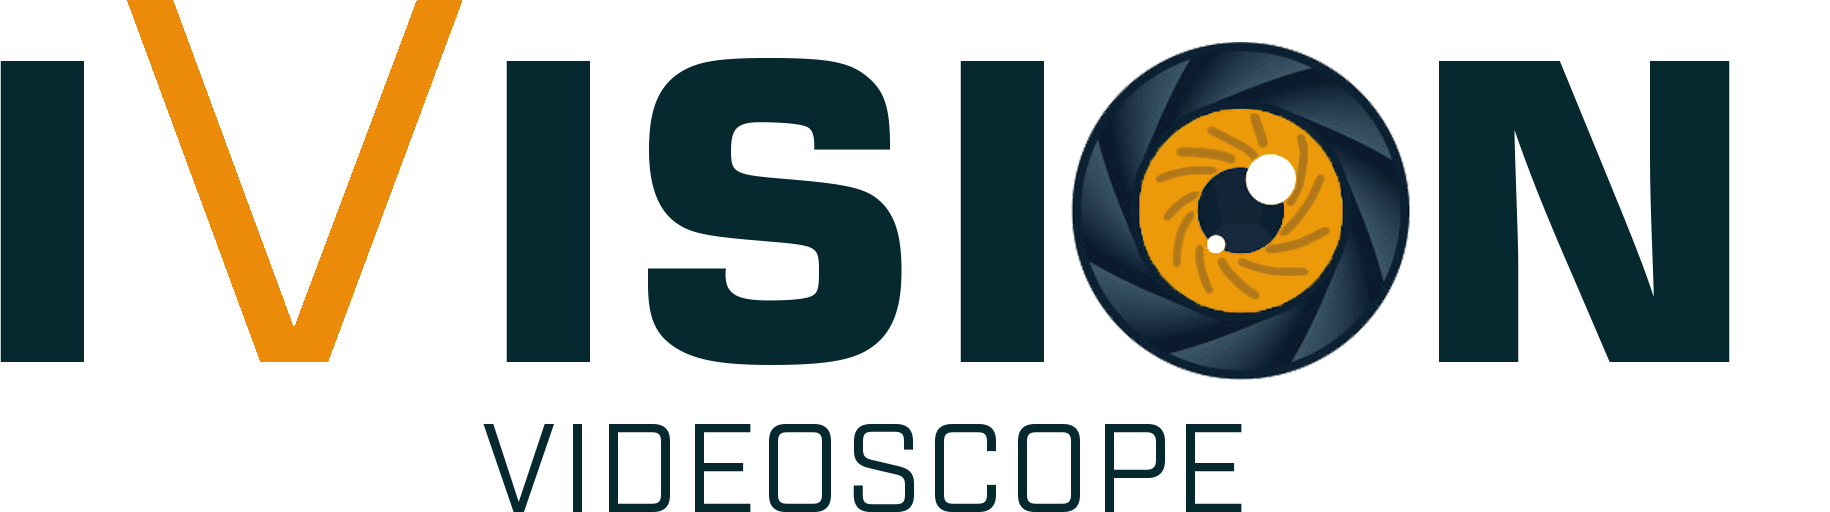 logo iVision Videoscope